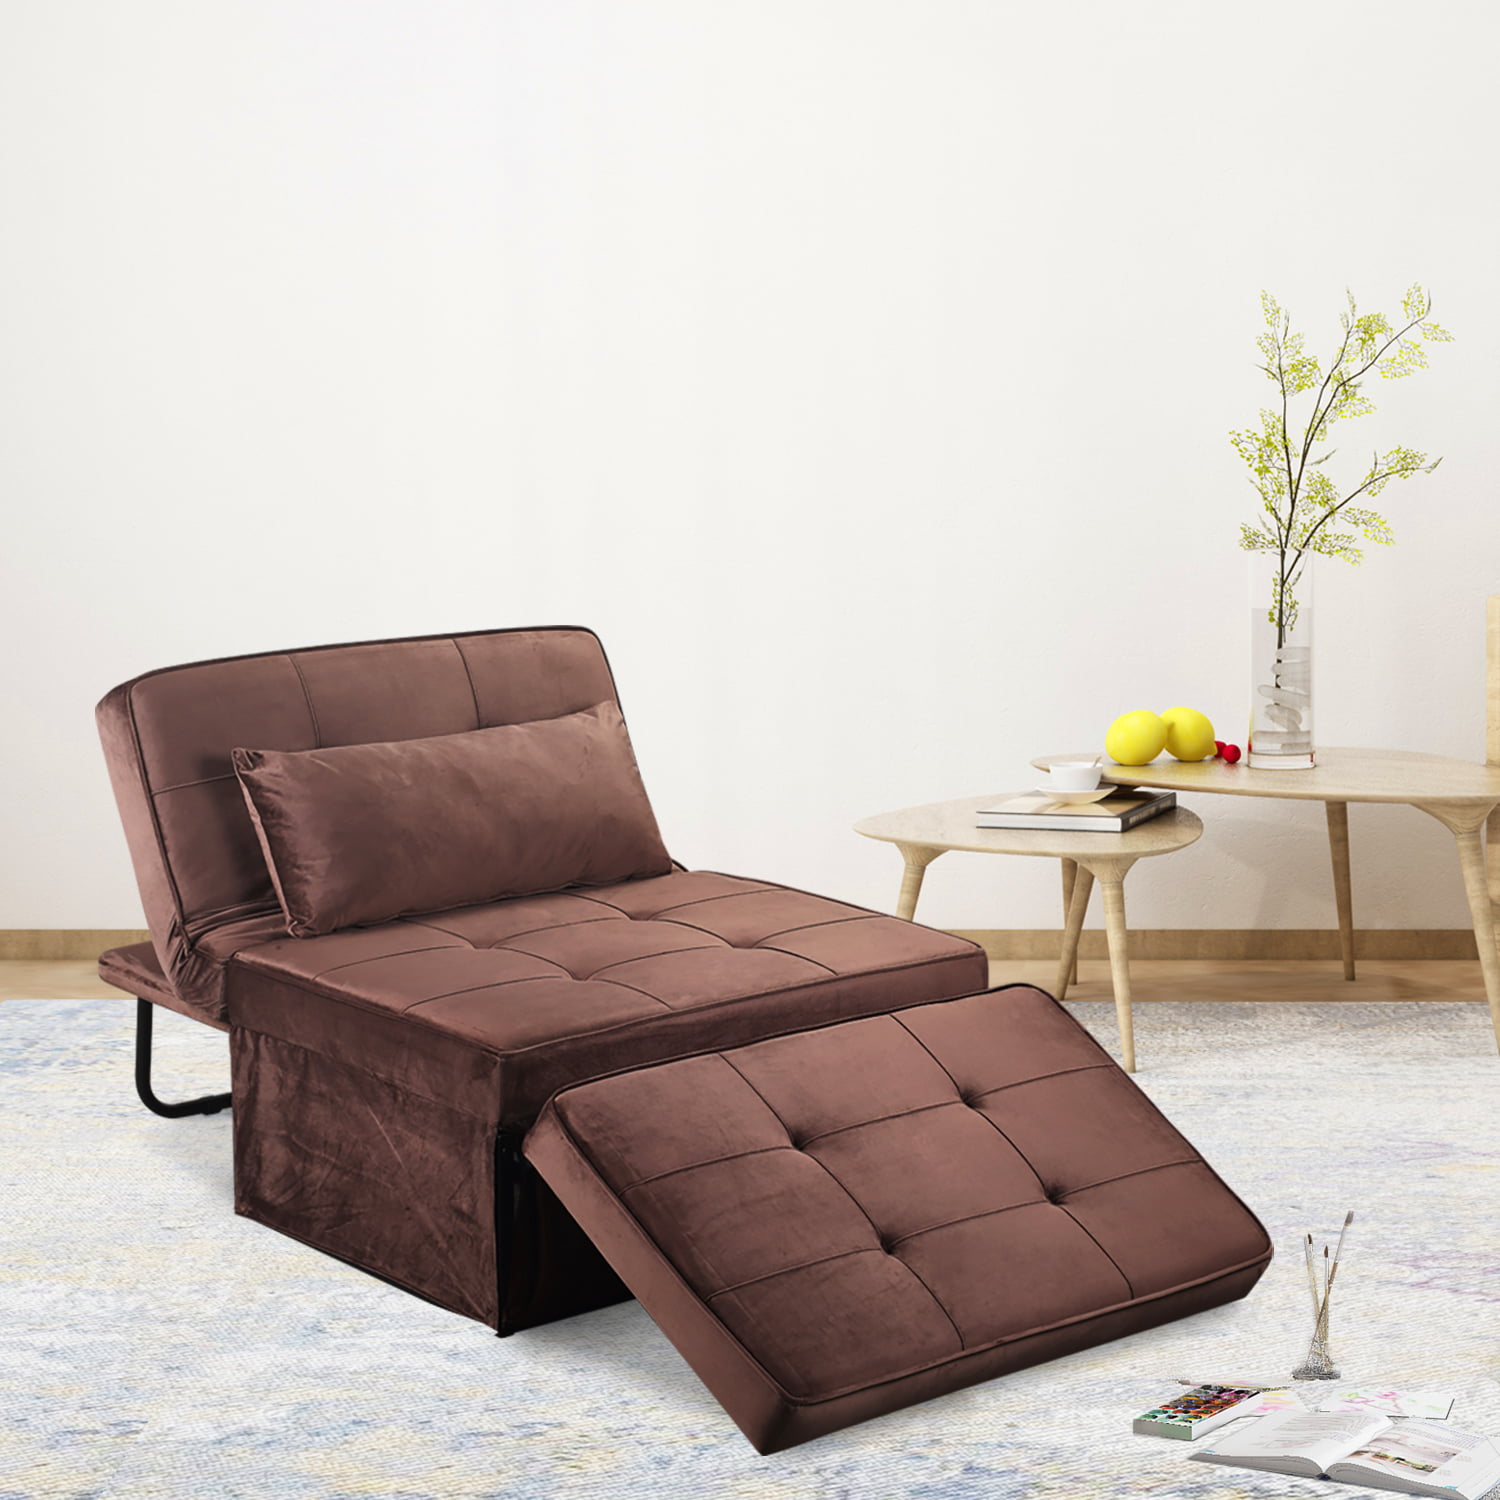 Ainfox 4 in 1  Ottoman Sleeper Guest Chair Sofa  Bed  Multi 